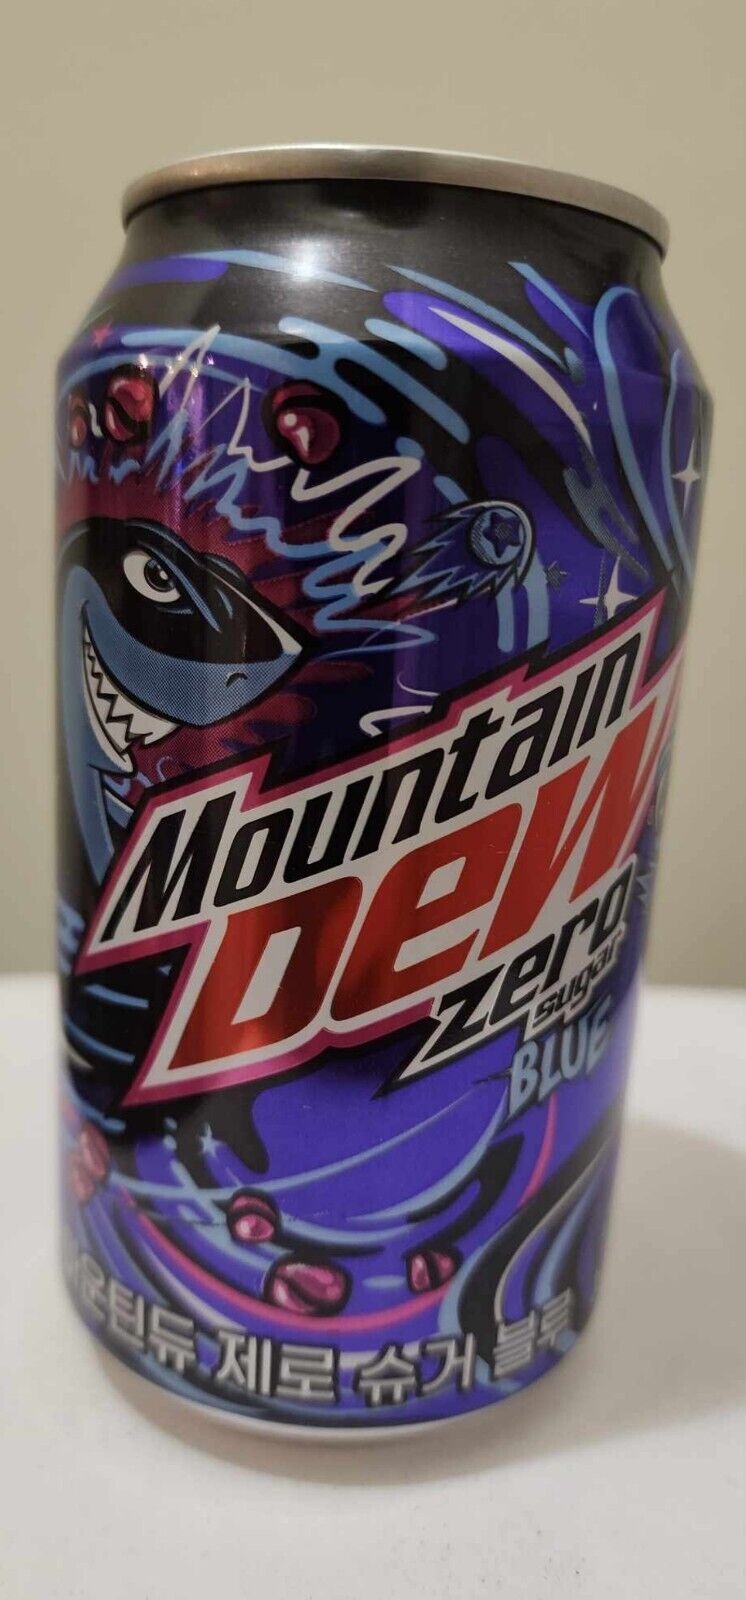 Mountain Dew Blue Zero Korea Exclusive Flavor